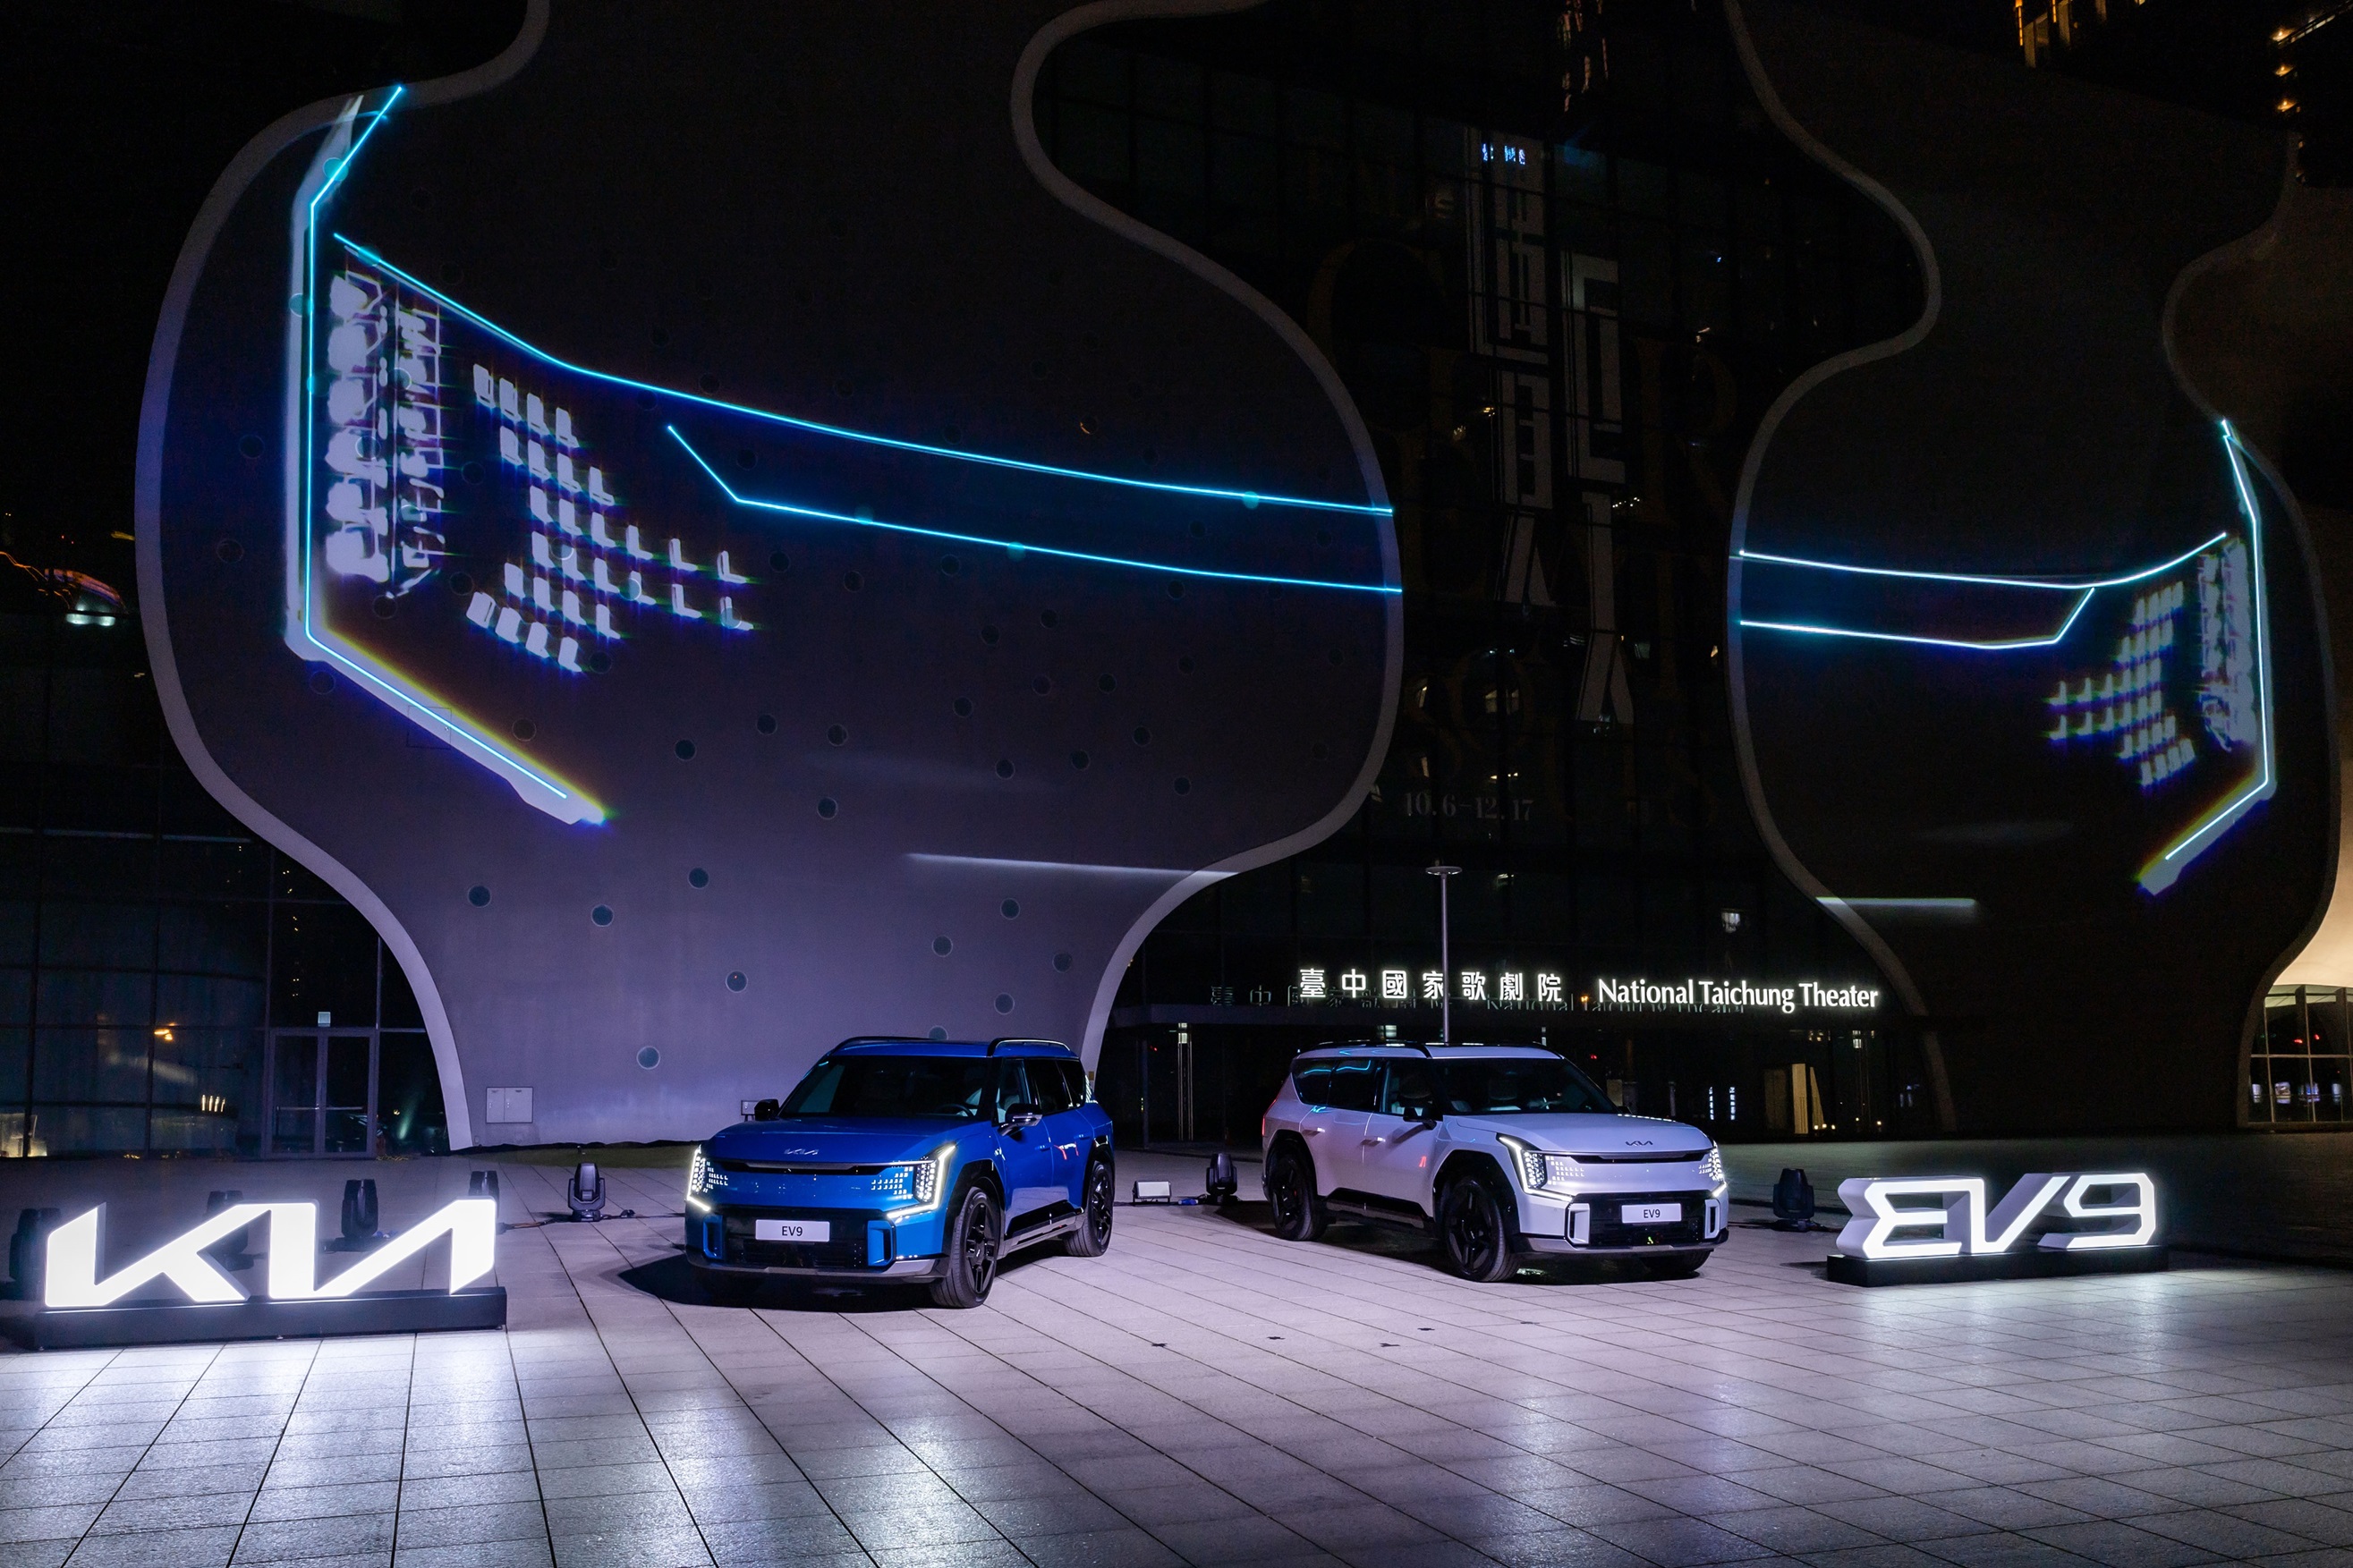 1.The Kia EV9純電智慧旗艦LSUV將於6月19日以「Edge Design前瞻格局、Freedom Premium尊榮隨心、Green Innovation綠能革新」三大DNA，於「國家戲劇院」正式上市。